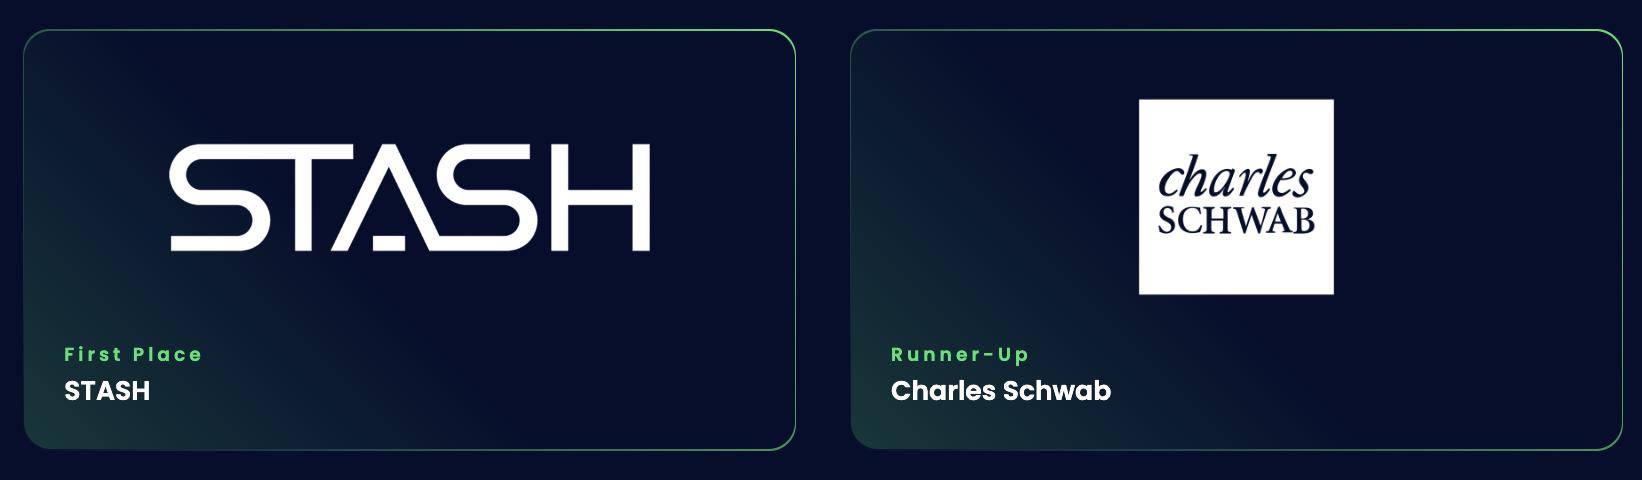 First Place: Stash ; Runner-Up: Charles Schwab 